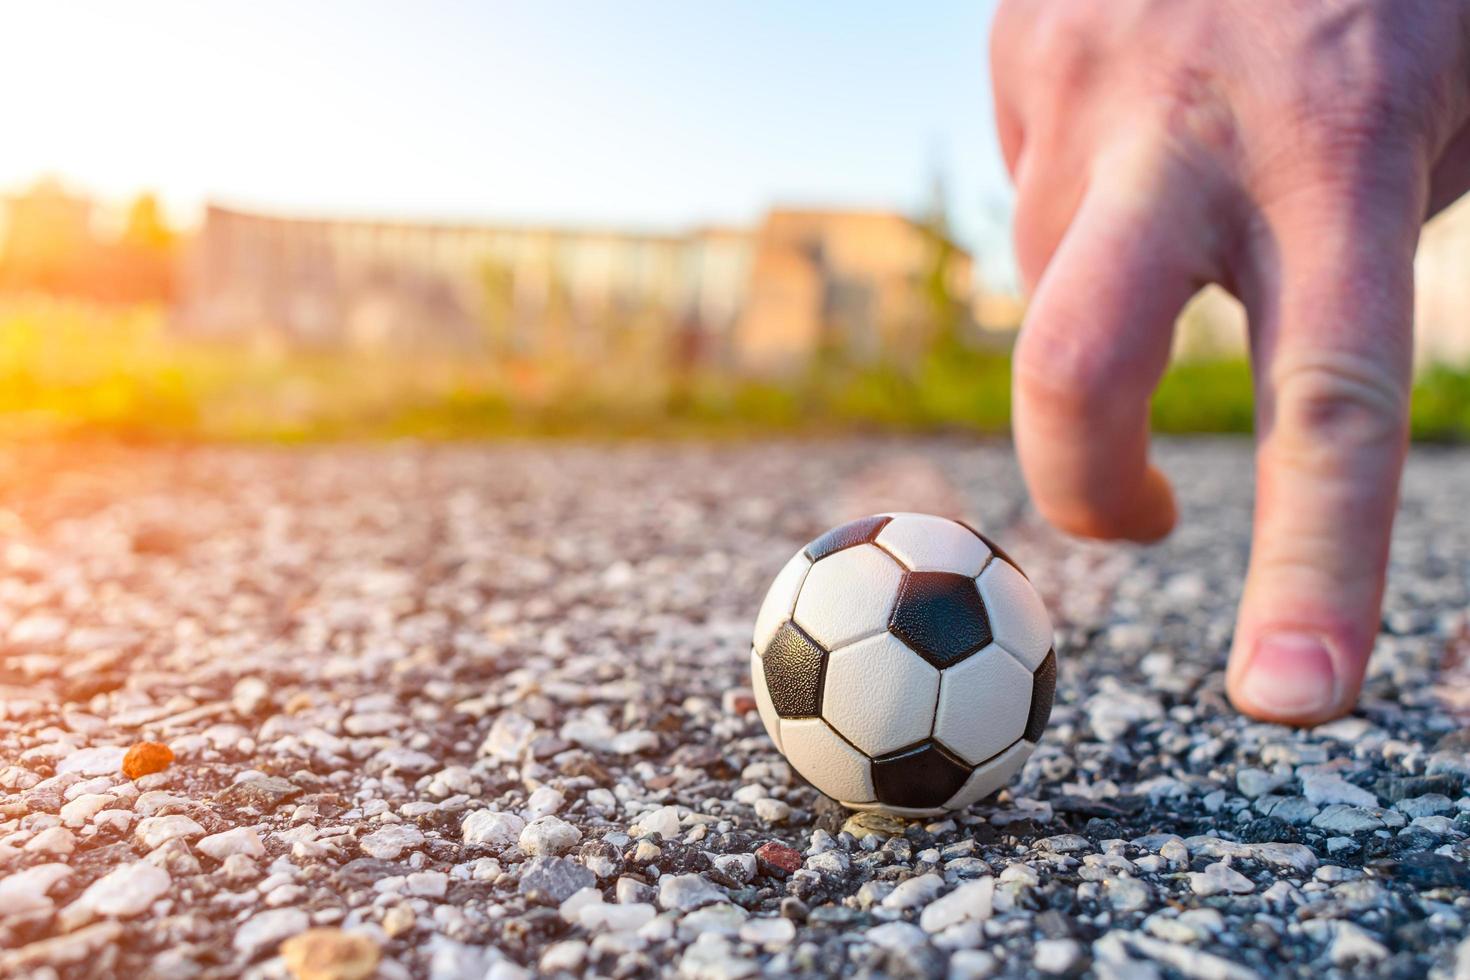 An impromptu finger football game with a souvenir ball photo